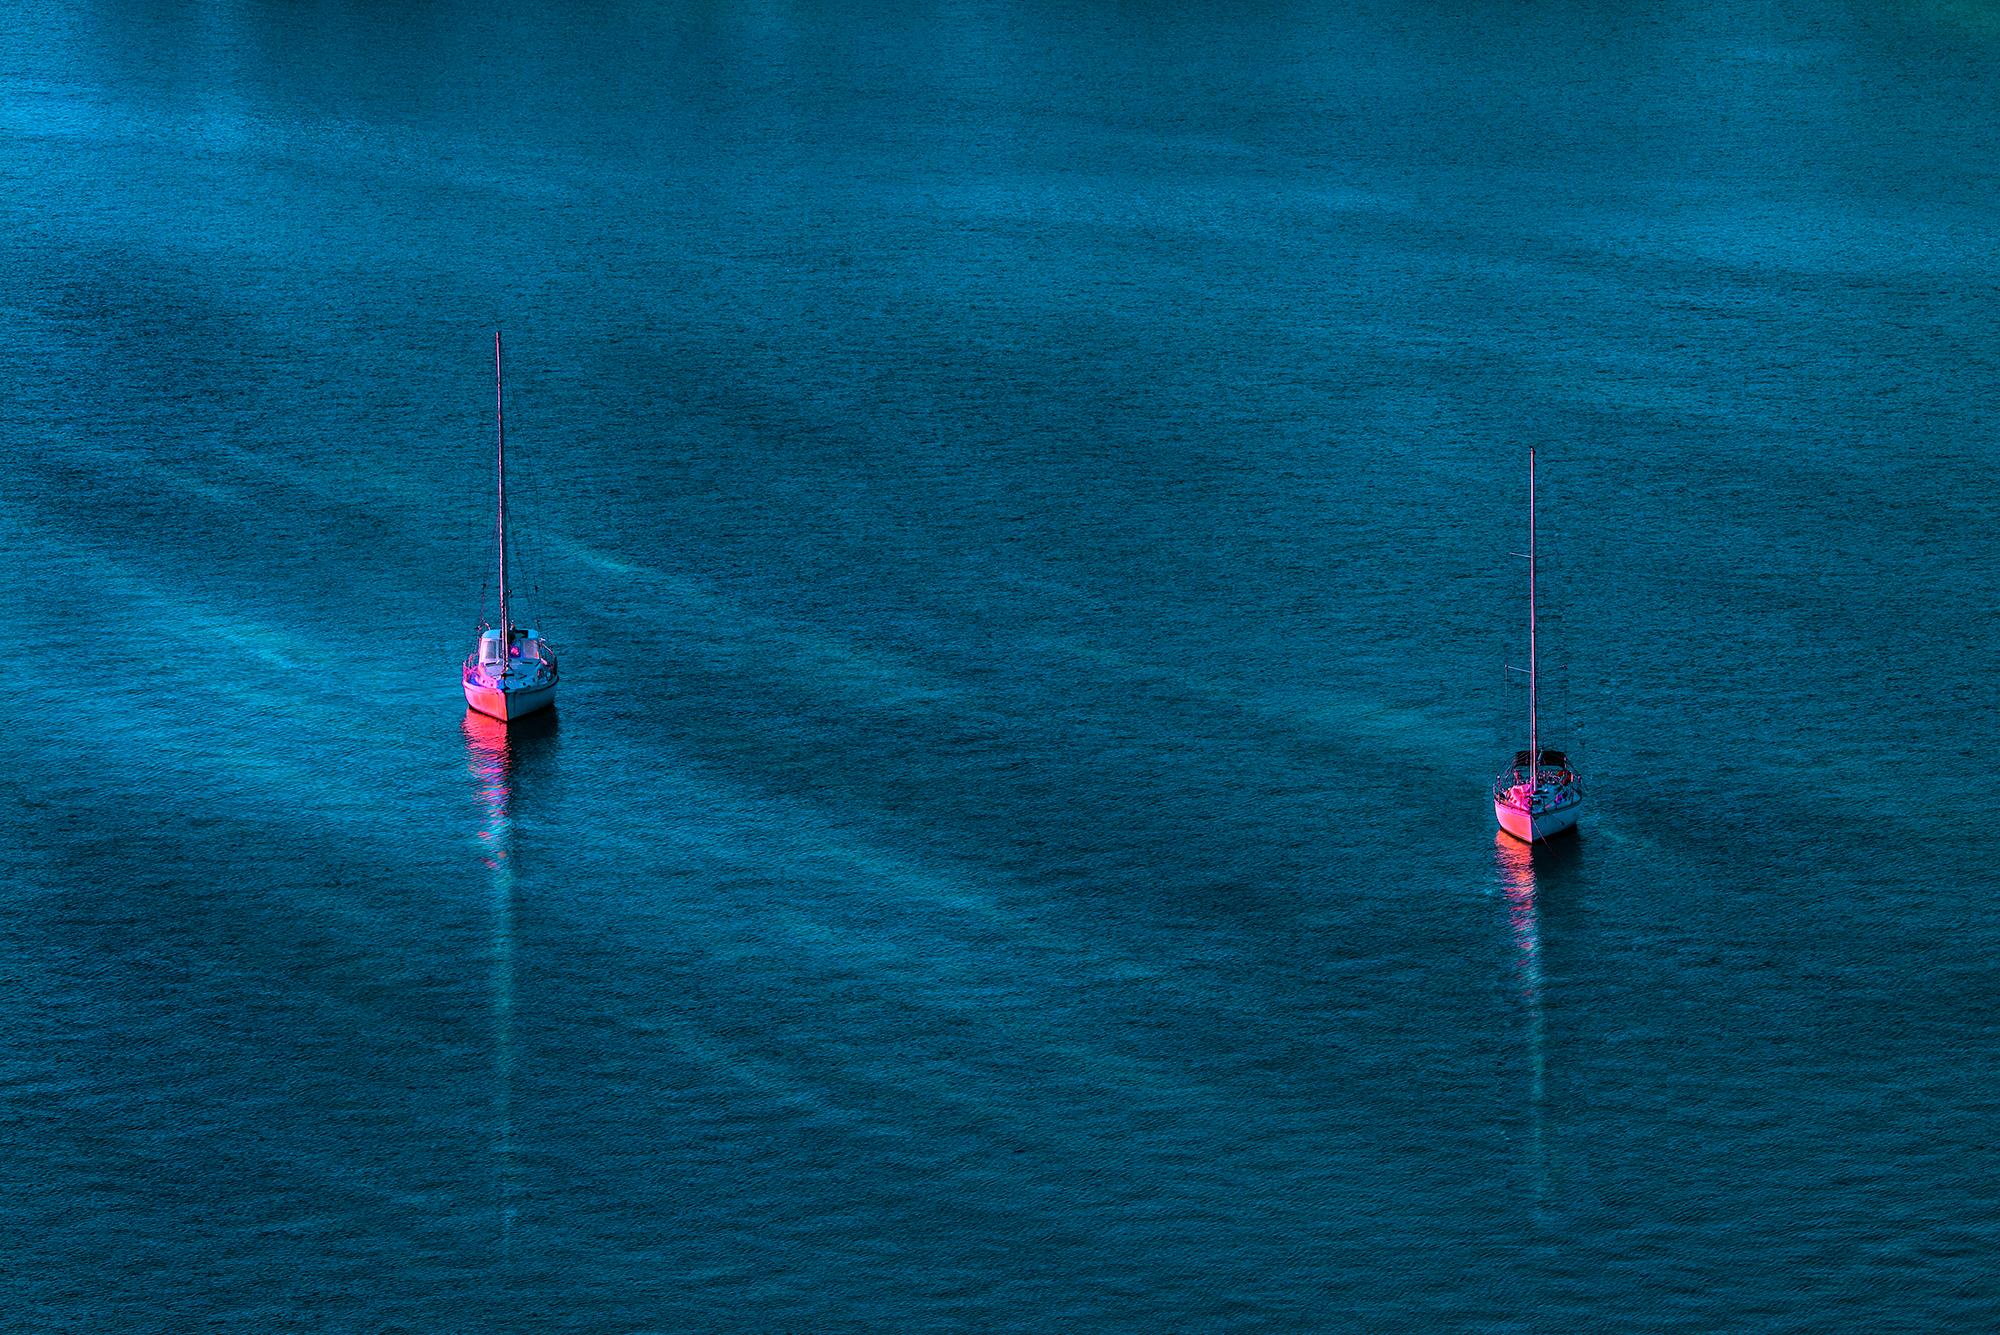 Robert Funk Landscape Photograph - Pink Sailboats on a Blue Green Sea 